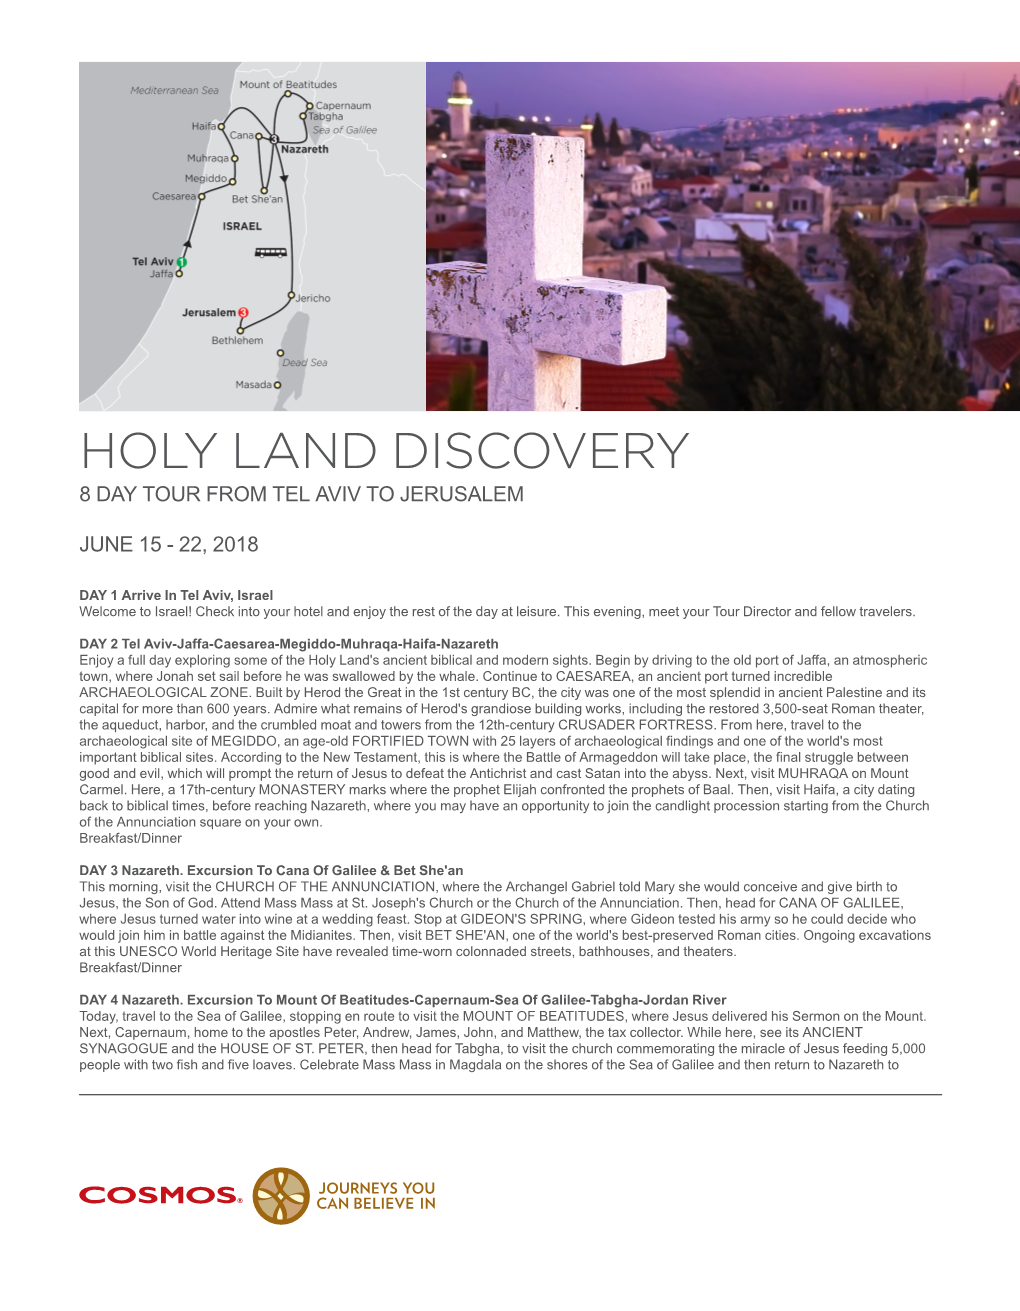 Holy Land Discovery 8 Day Tour from Tel Aviv to Jerusalem